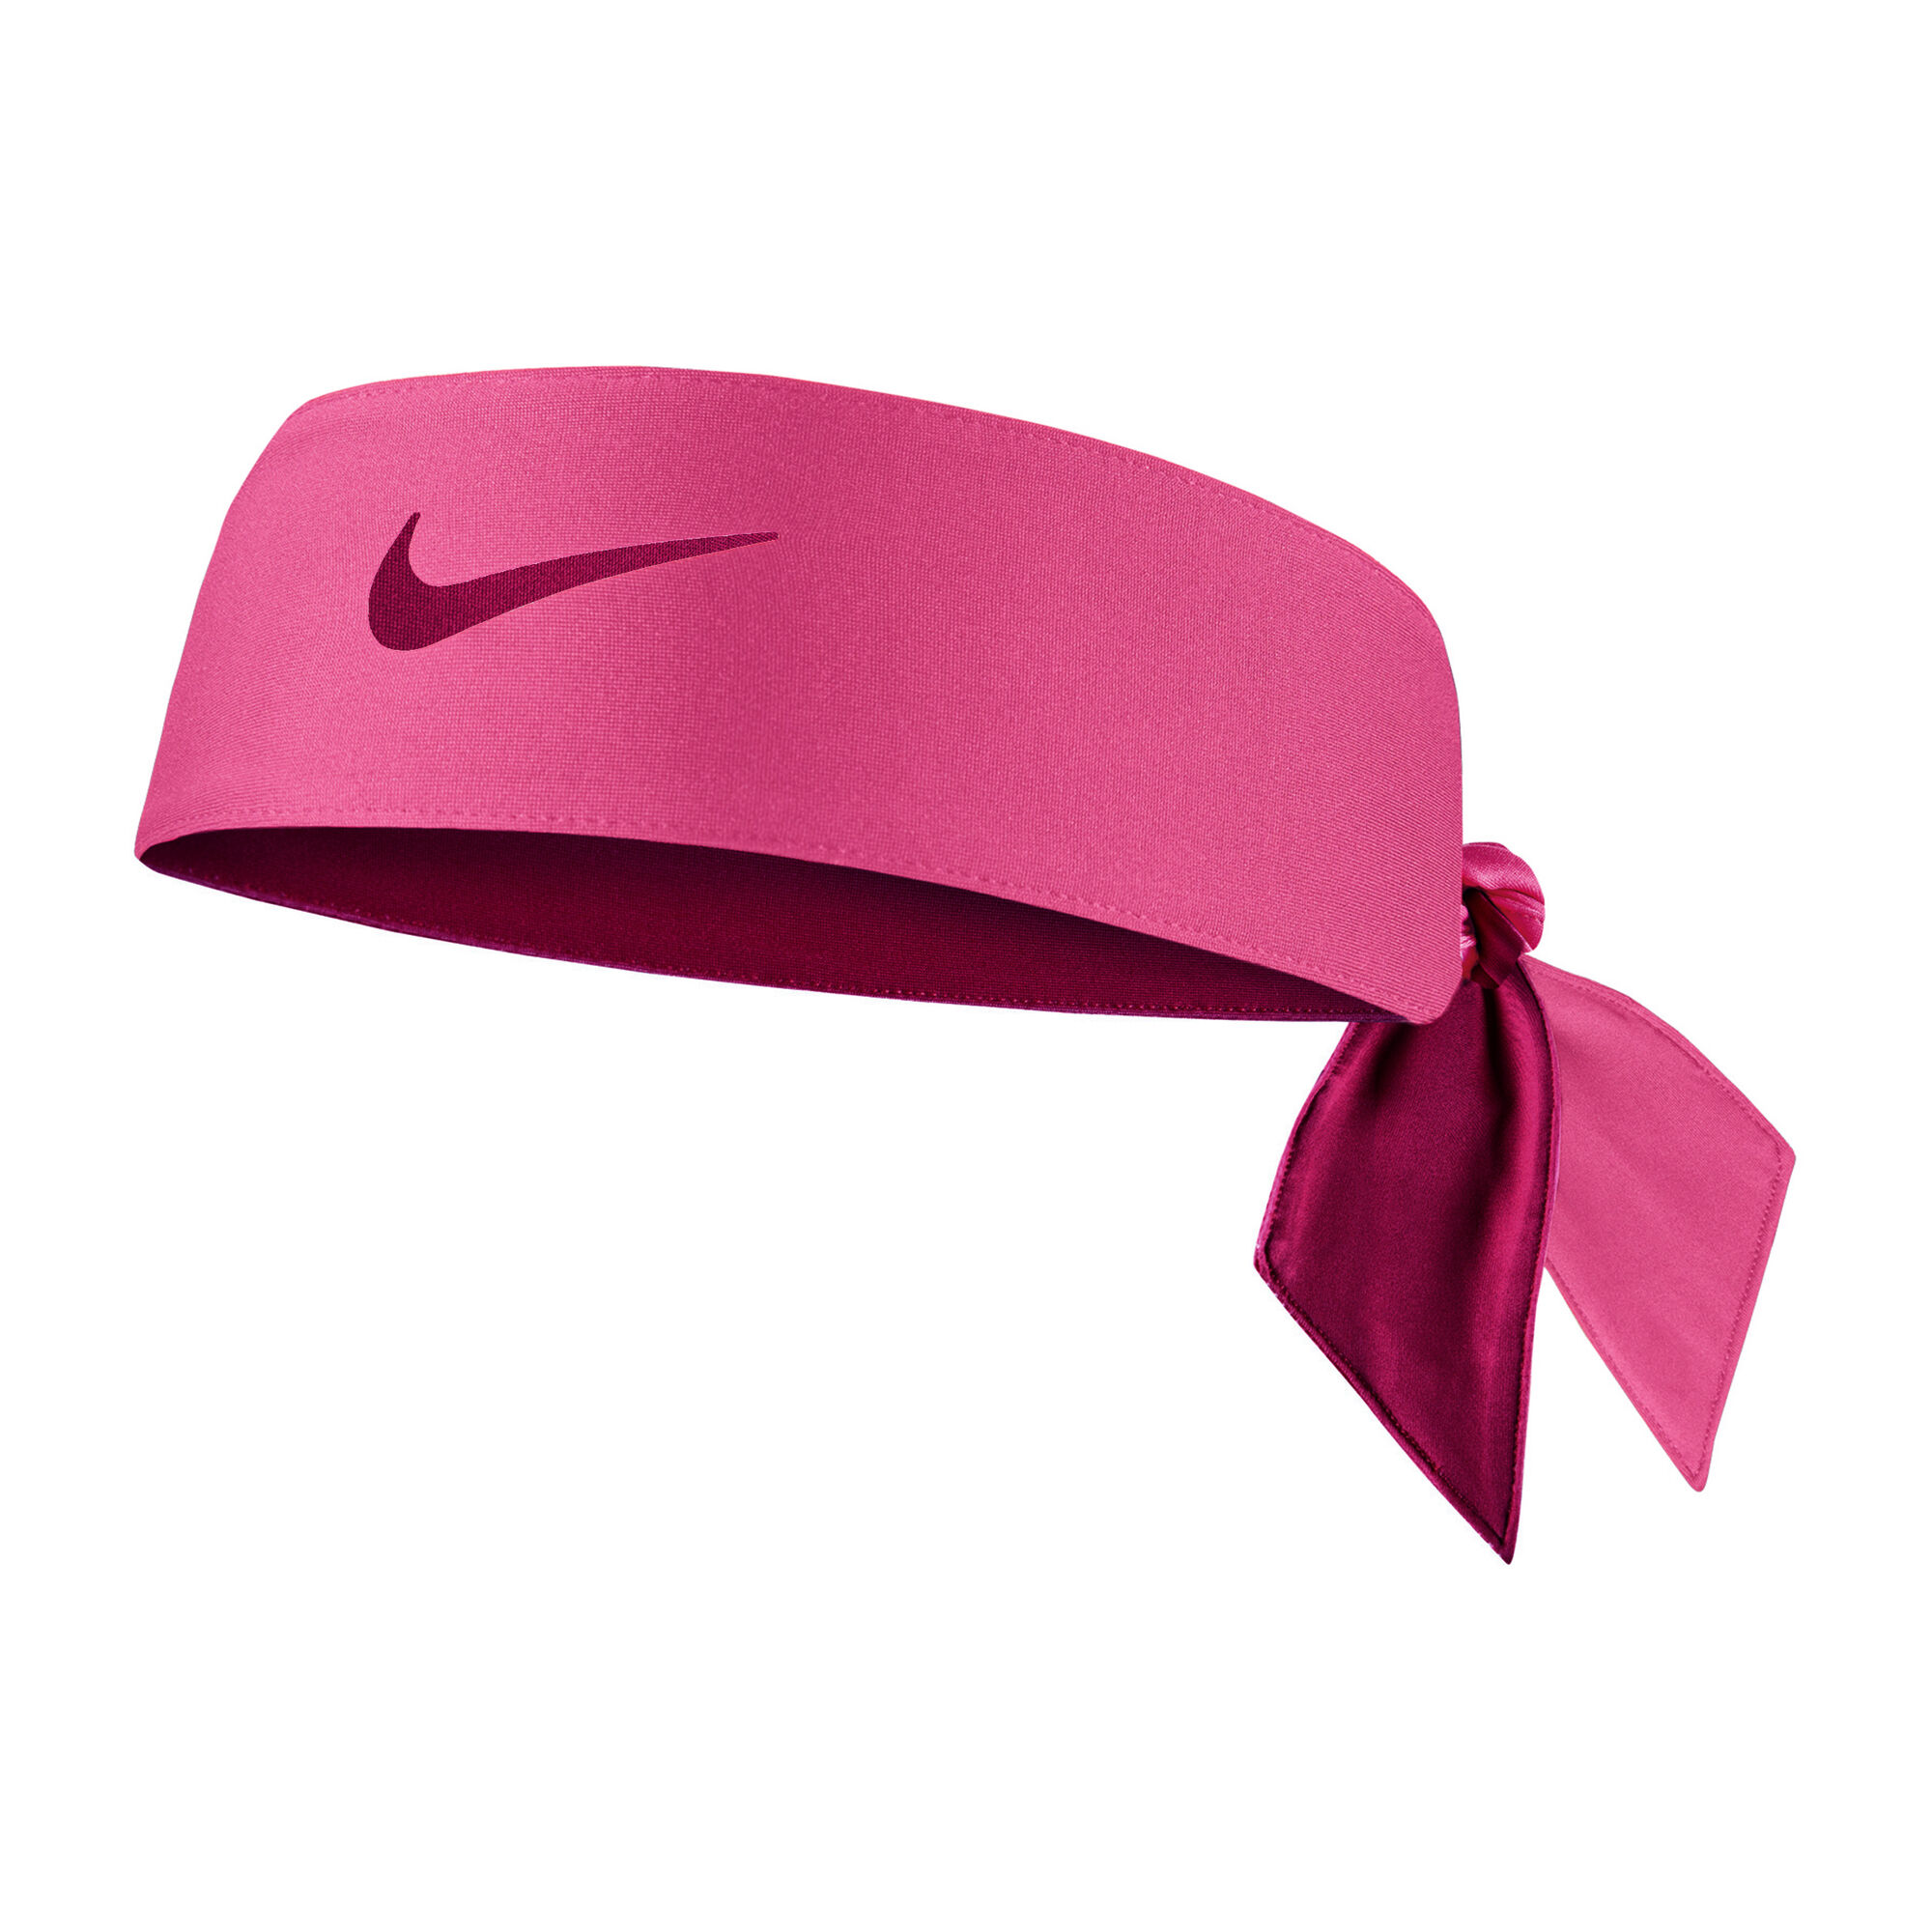 Nike 4.0 - Rosa compra online Tennis-Point